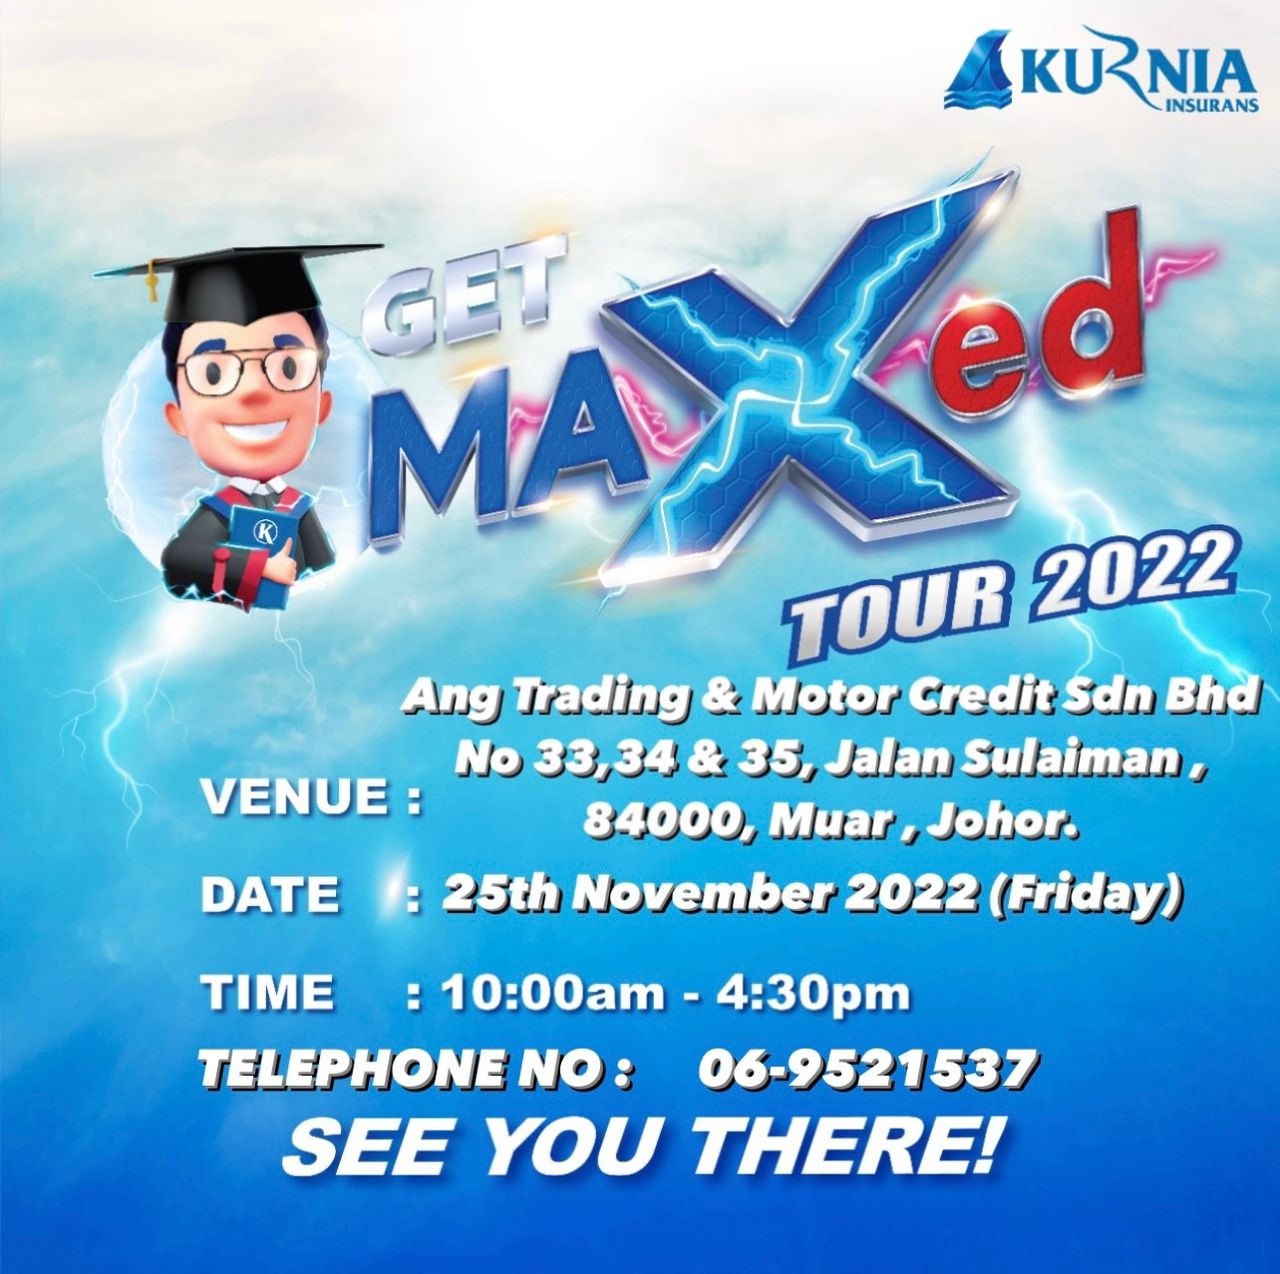 Get Maxed Tour 2022 by Kurnia Insurance